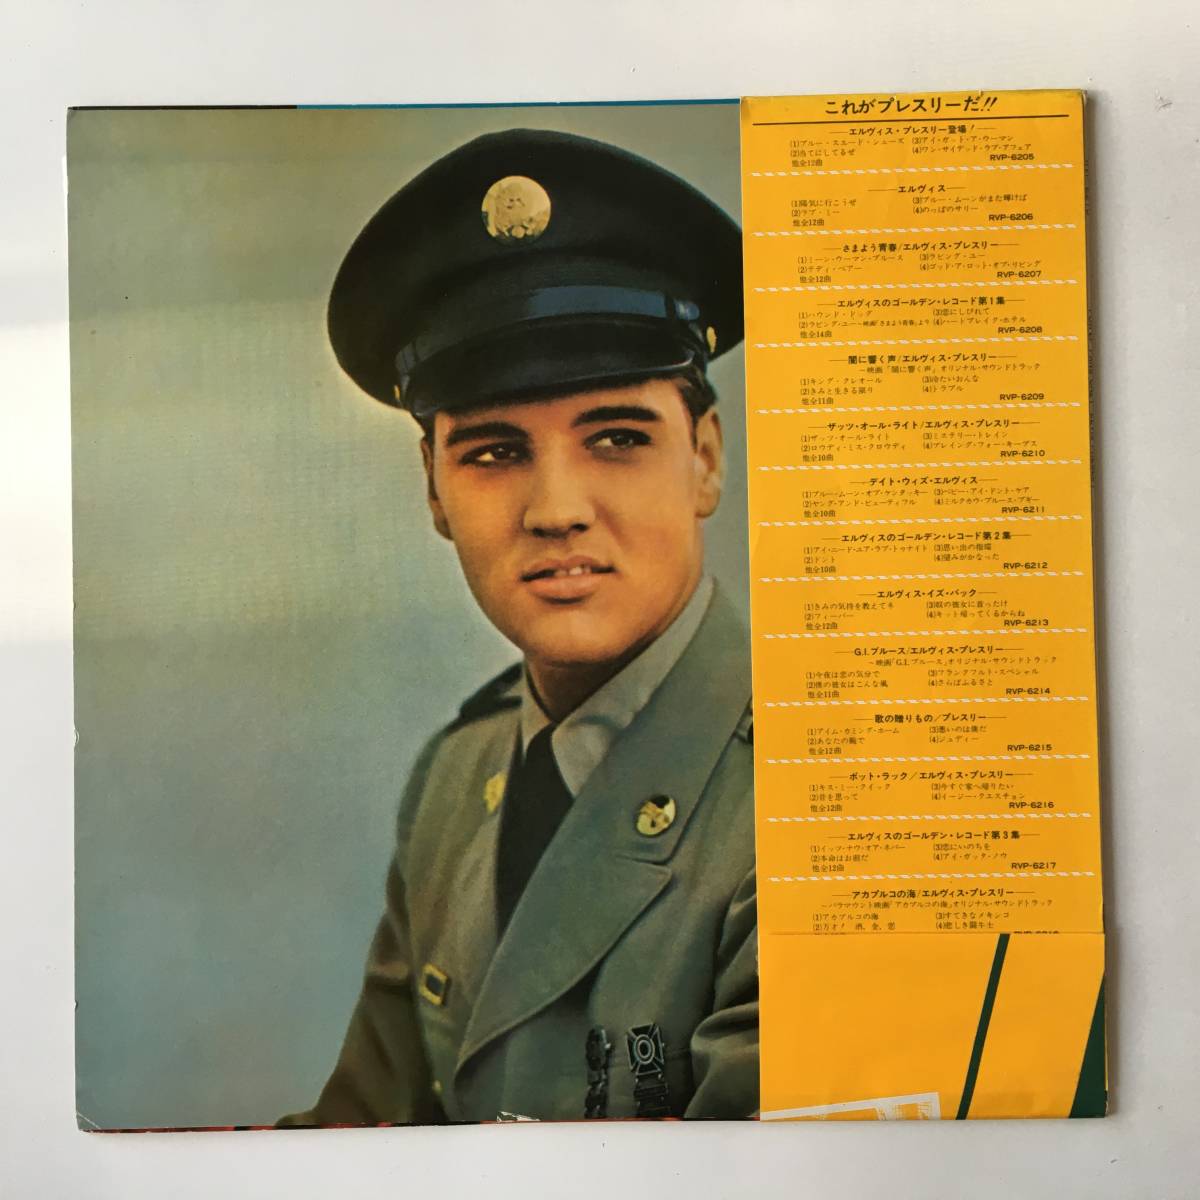 2416●Elvis Presley For LP Fans Only これがプレスリーだ！！ RVP 6210 / ザッツ・オール・ライト / 12inch LP アナログ盤_画像2